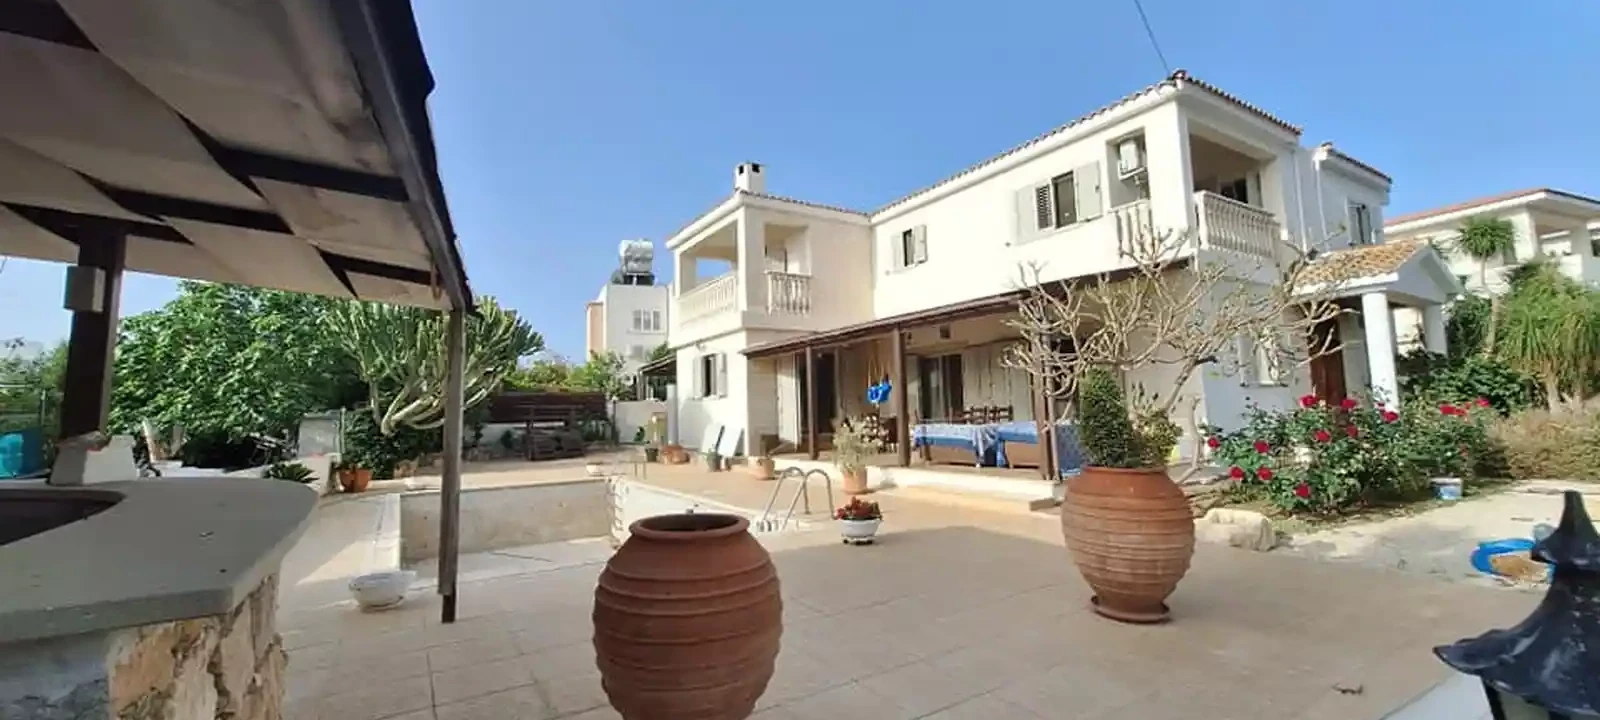 5-bedroom villa fоr sаle €600.000, image 1